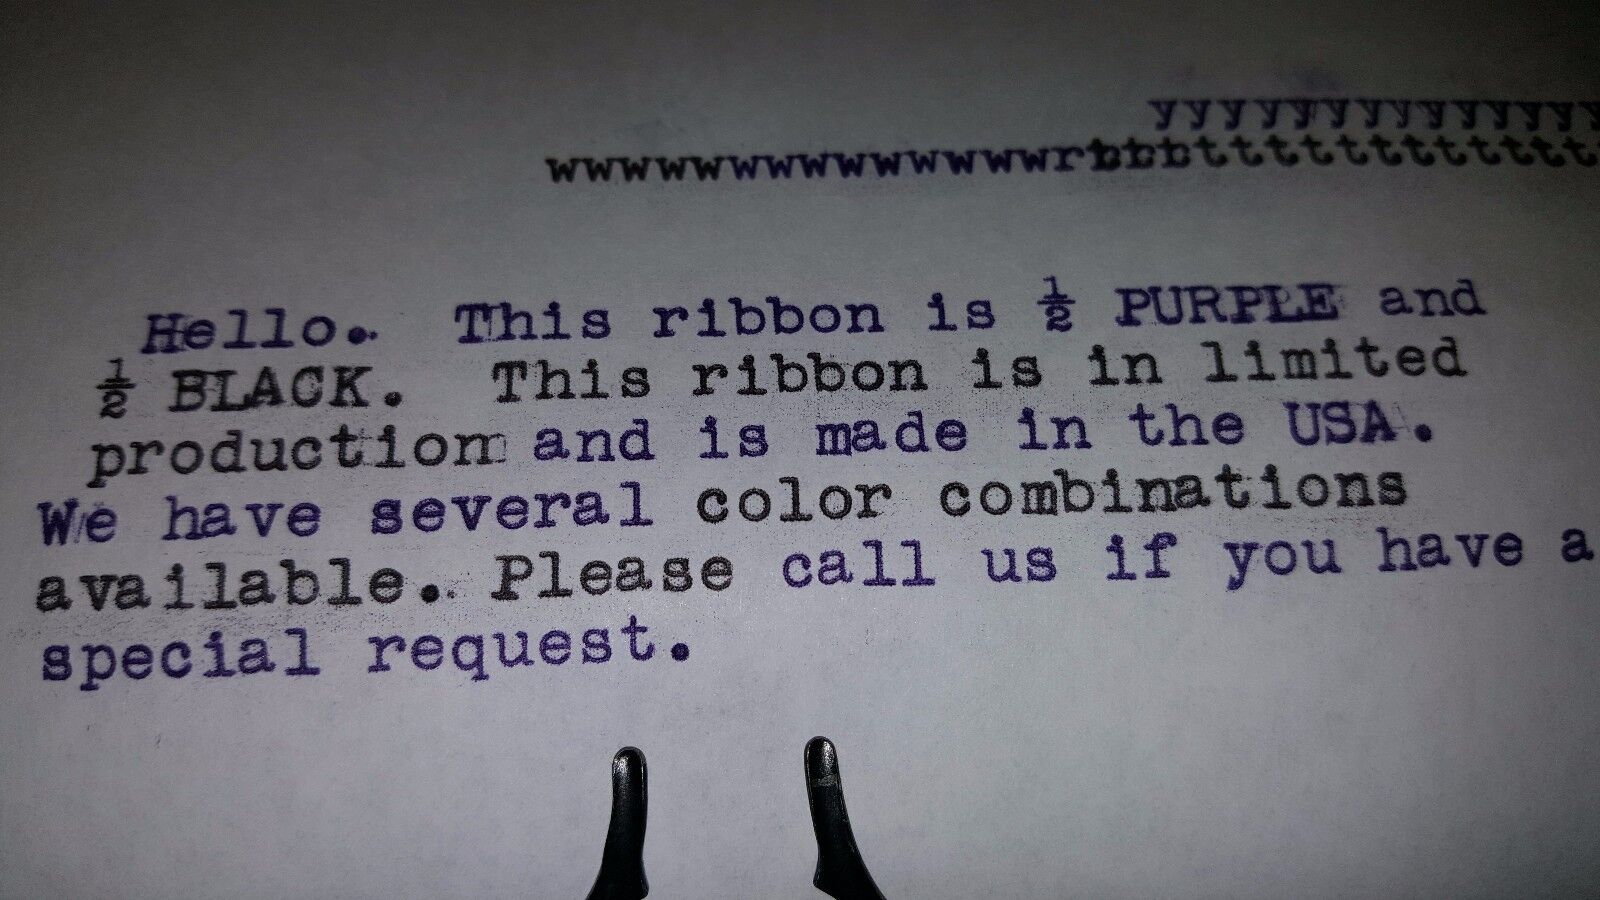 Universal Typewriter Ink Ribbon - Black and Purple Ink Ribbon - Made in USA